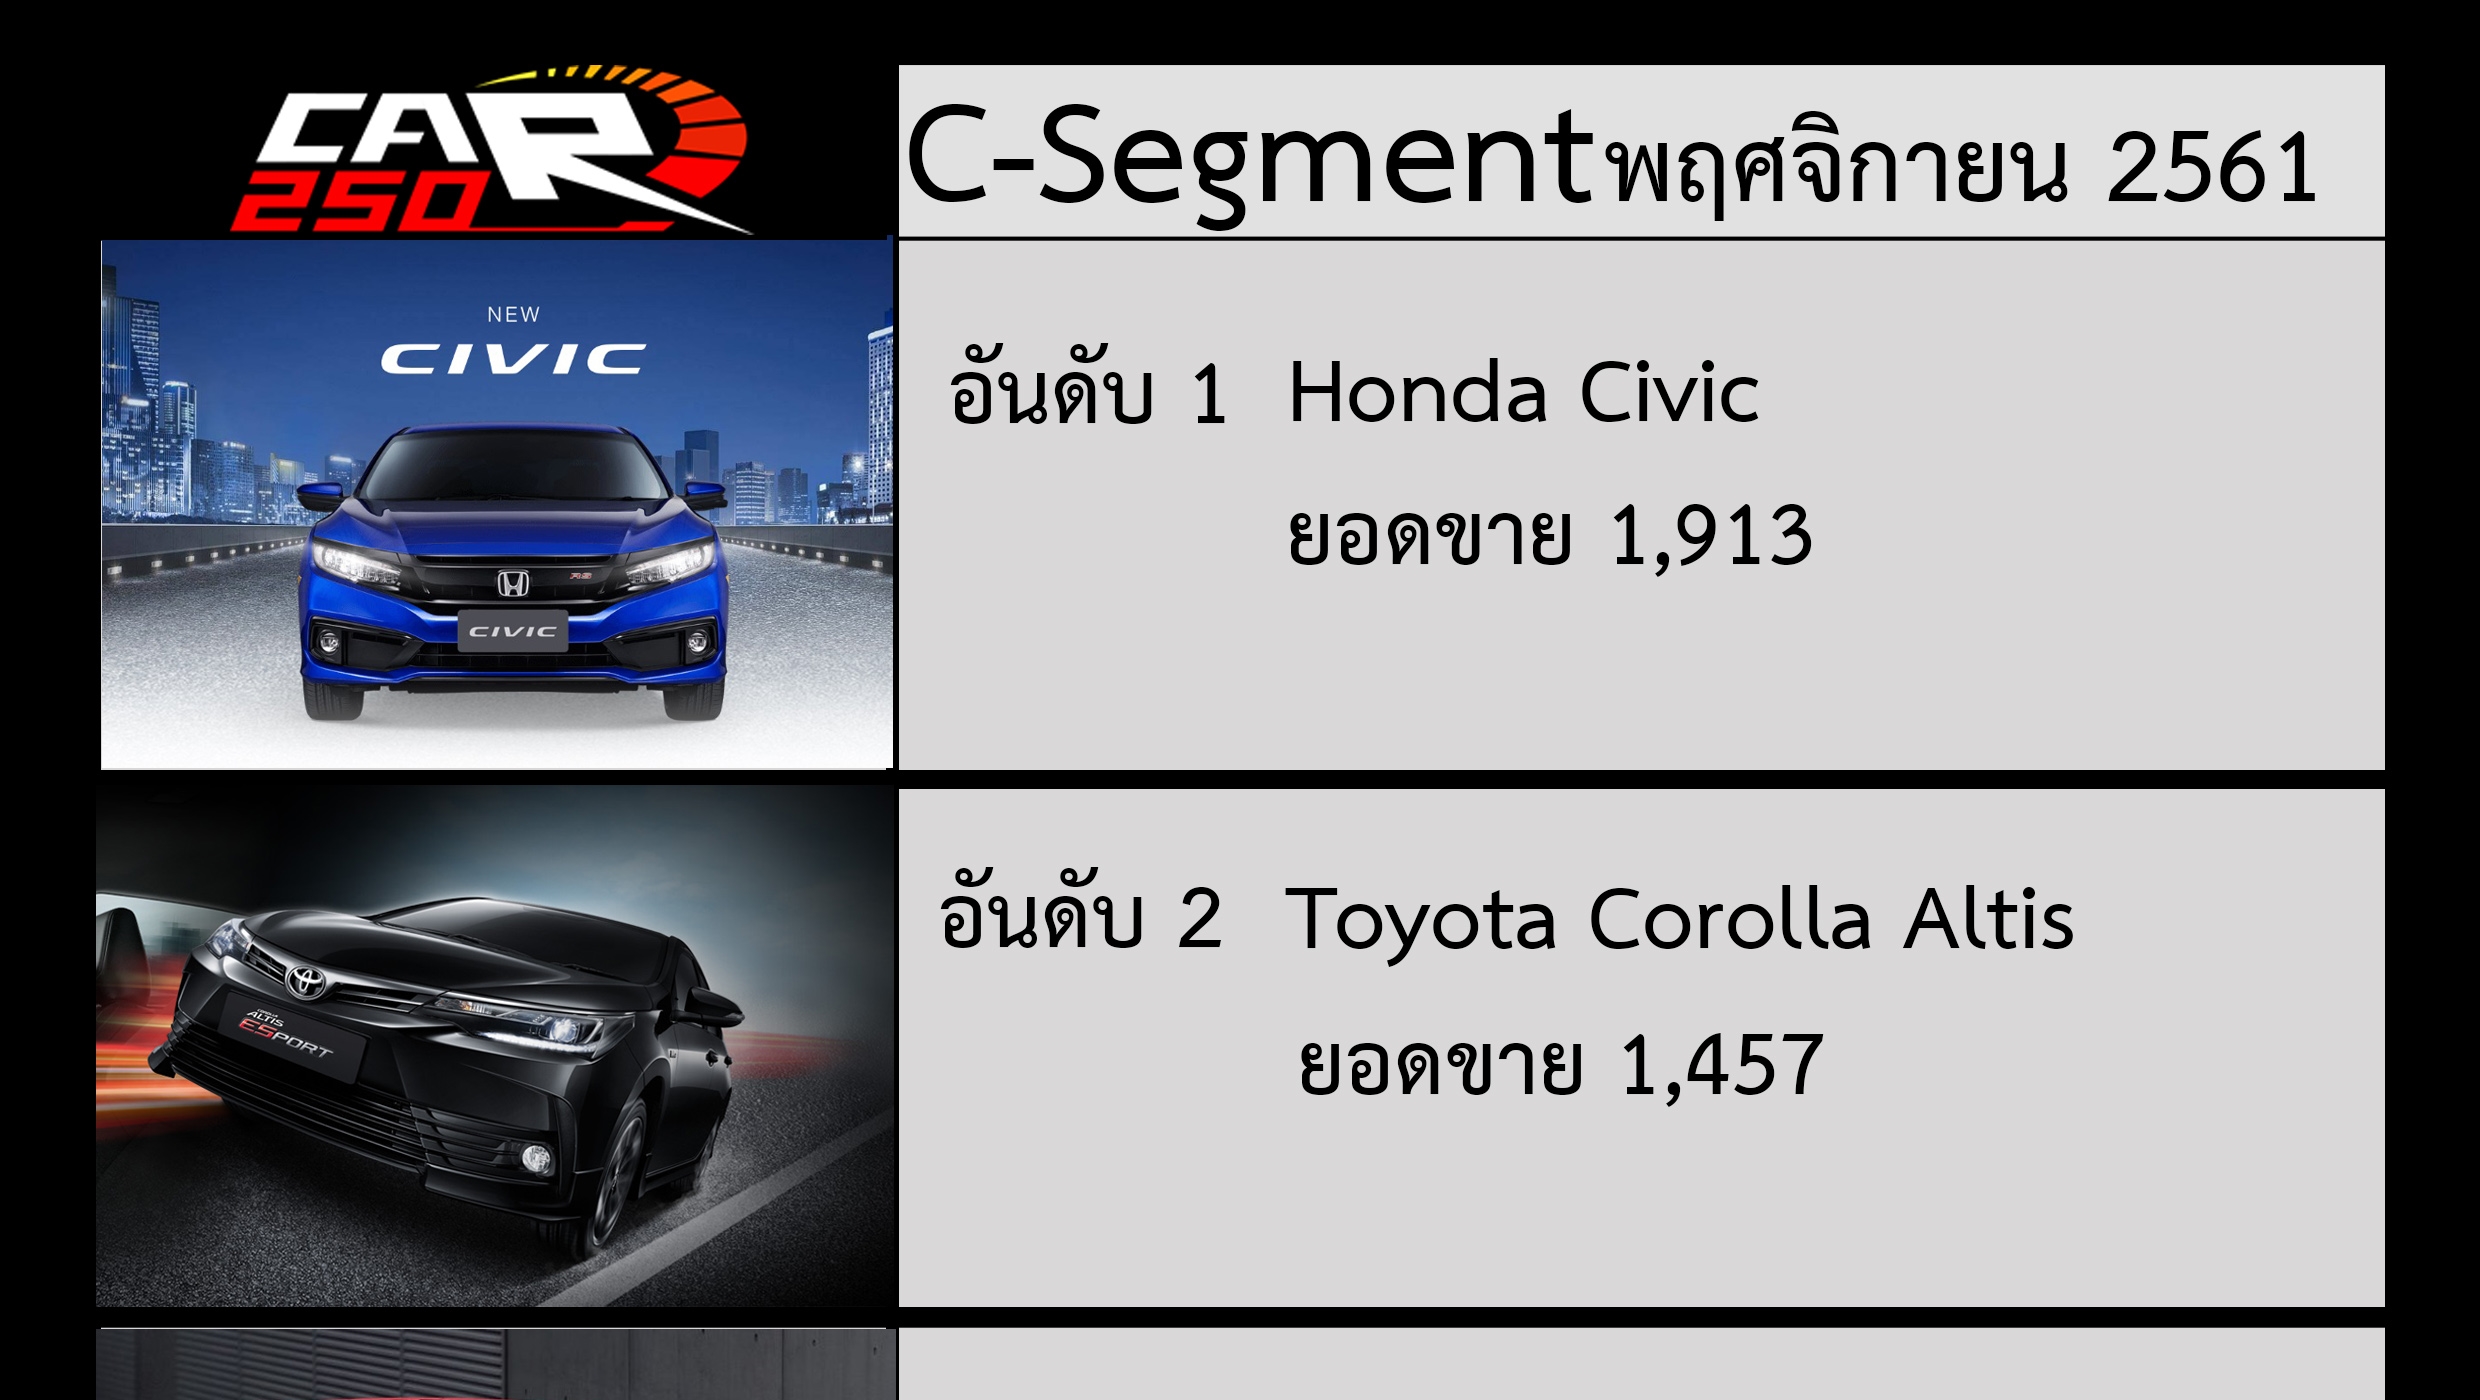 Honda Civic อันดับ 1 ในกลุ่ม C-Segment พฤศจิกายน 2561